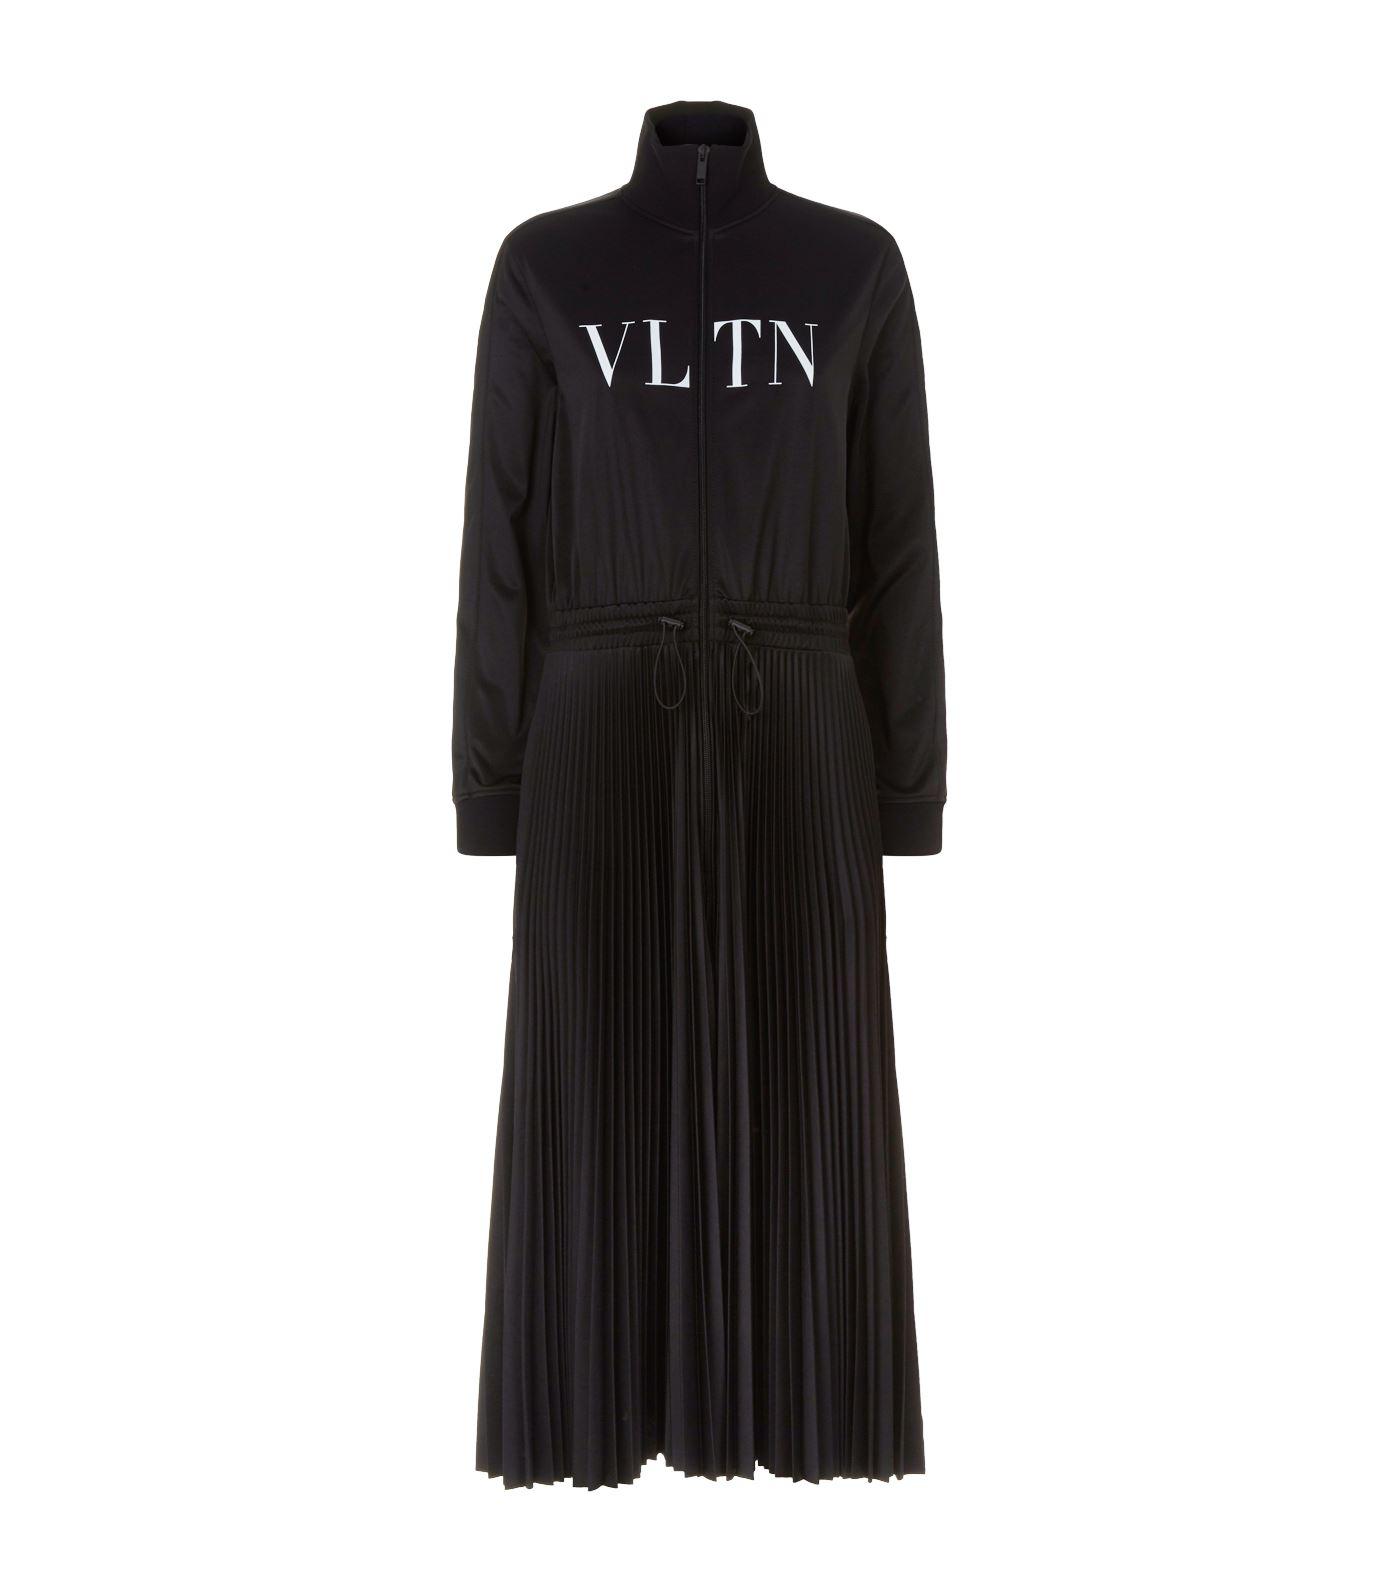 Valentino Vltn Print Pleated Dress in Black | Lyst